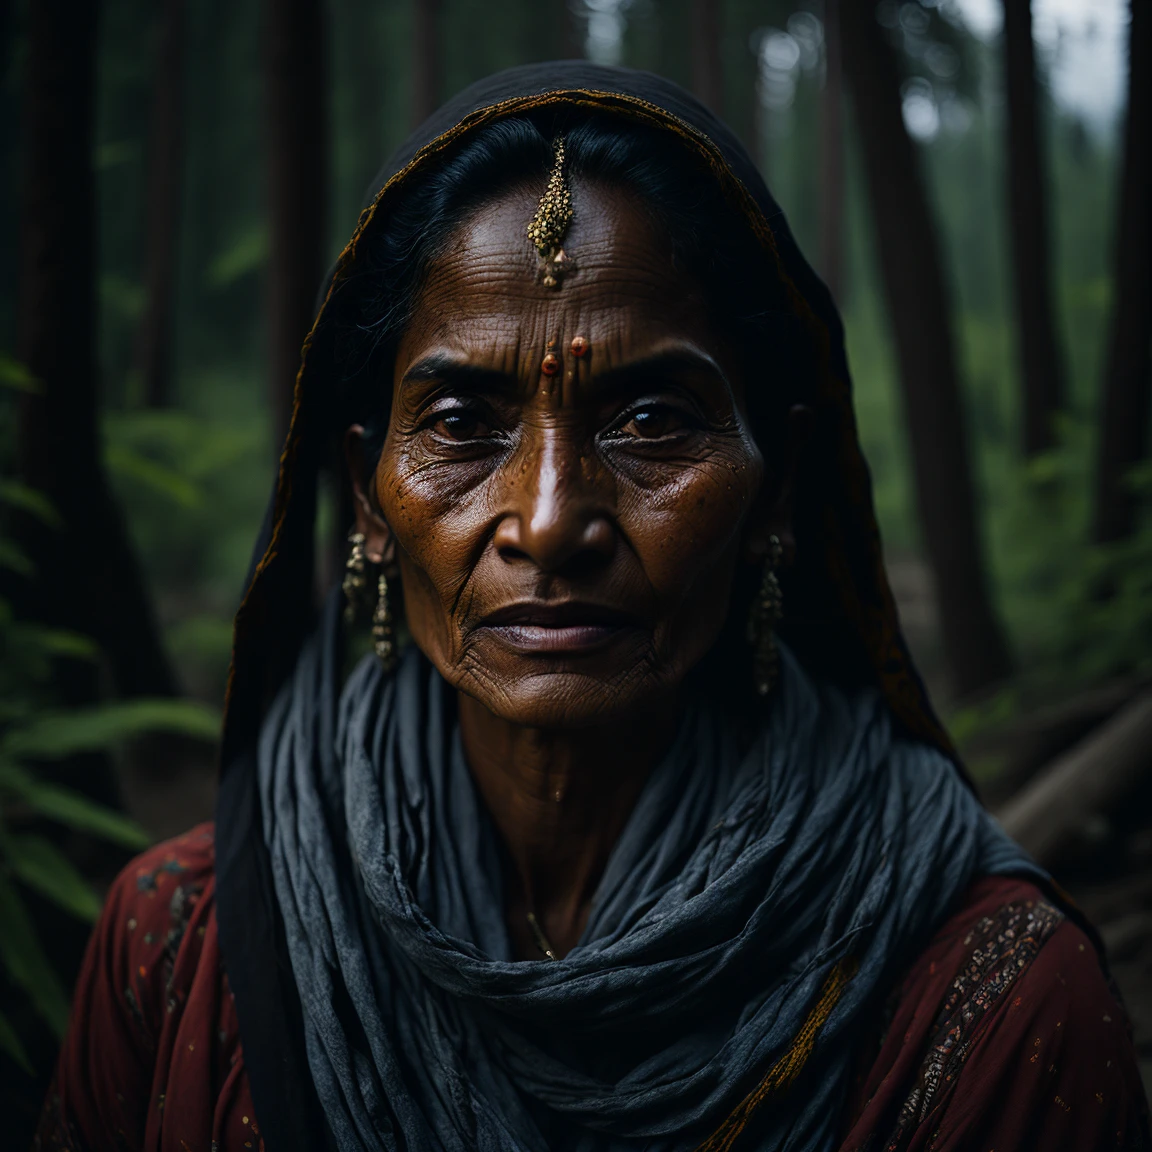 portrait oF an indian village woman in Forest in Himachal pradesh, clear Facial Features, cinematográfico, lente de 35 mm, F/1.8, Iluminación decorativa, iluminación global